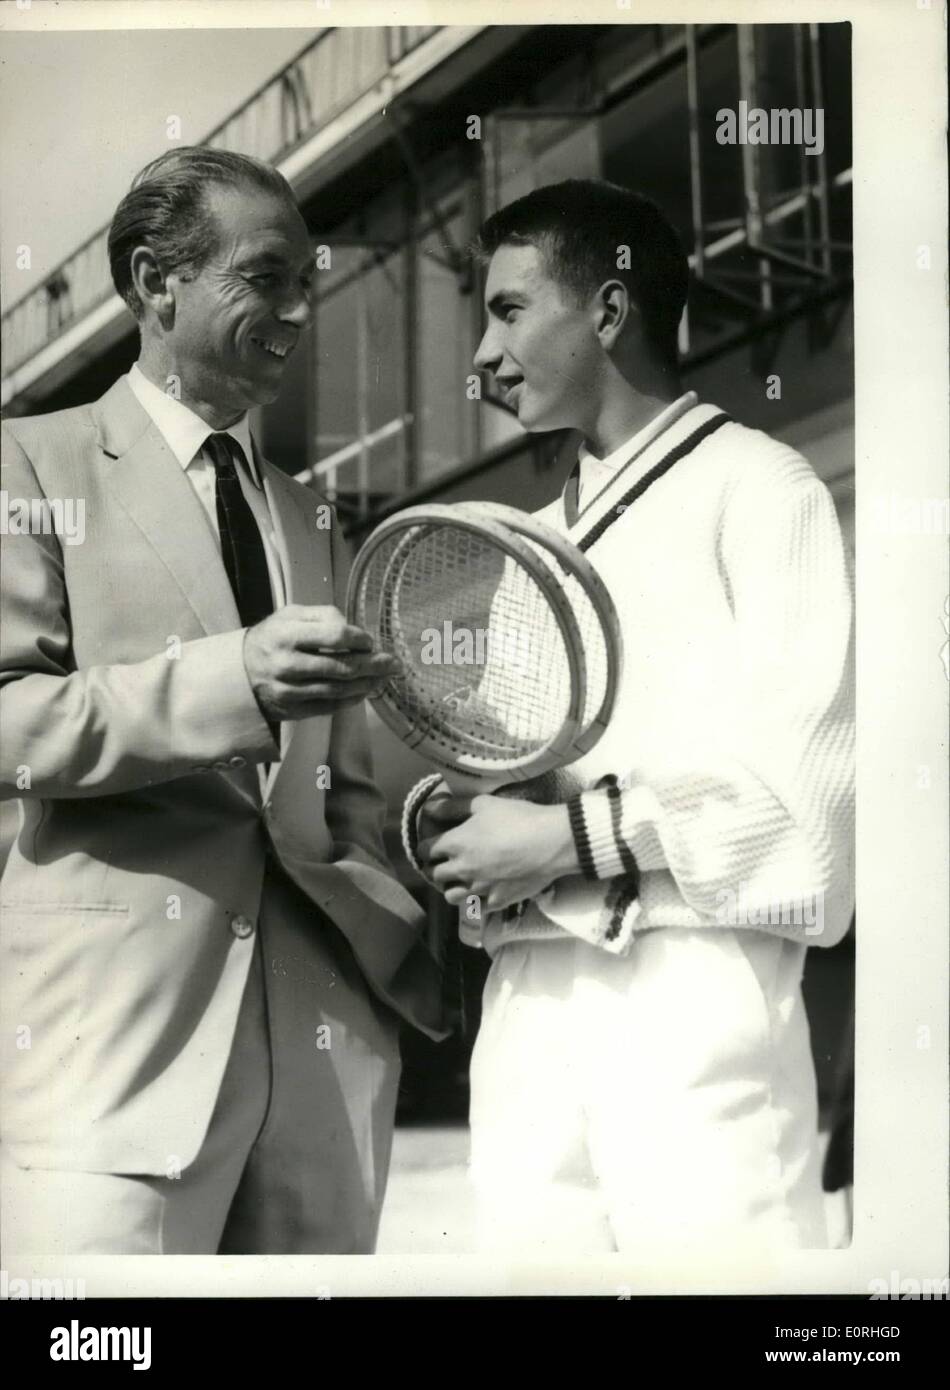 Sep. 09, 1959 - Stanley Matthews JNR. In Tennis Championships: Stanley  Matthews JNR. son of the world famous Footballer is taking part in the  Boys' Singles of the Junior Tennis Championships of